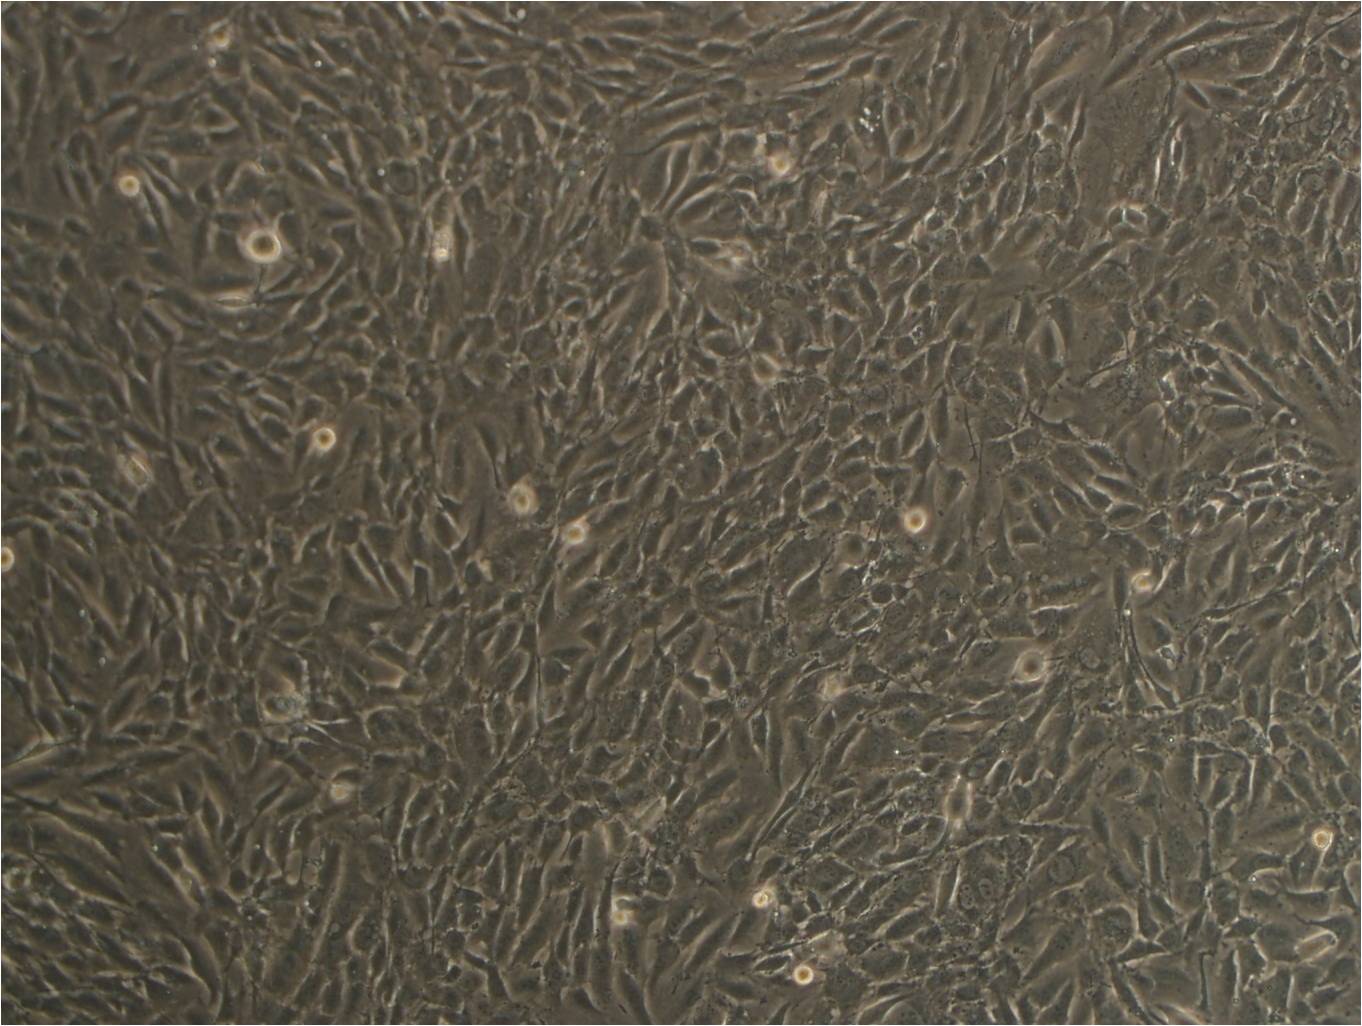 BIU-87 cell line人膀胱癌细胞系,BIU-87 cell line